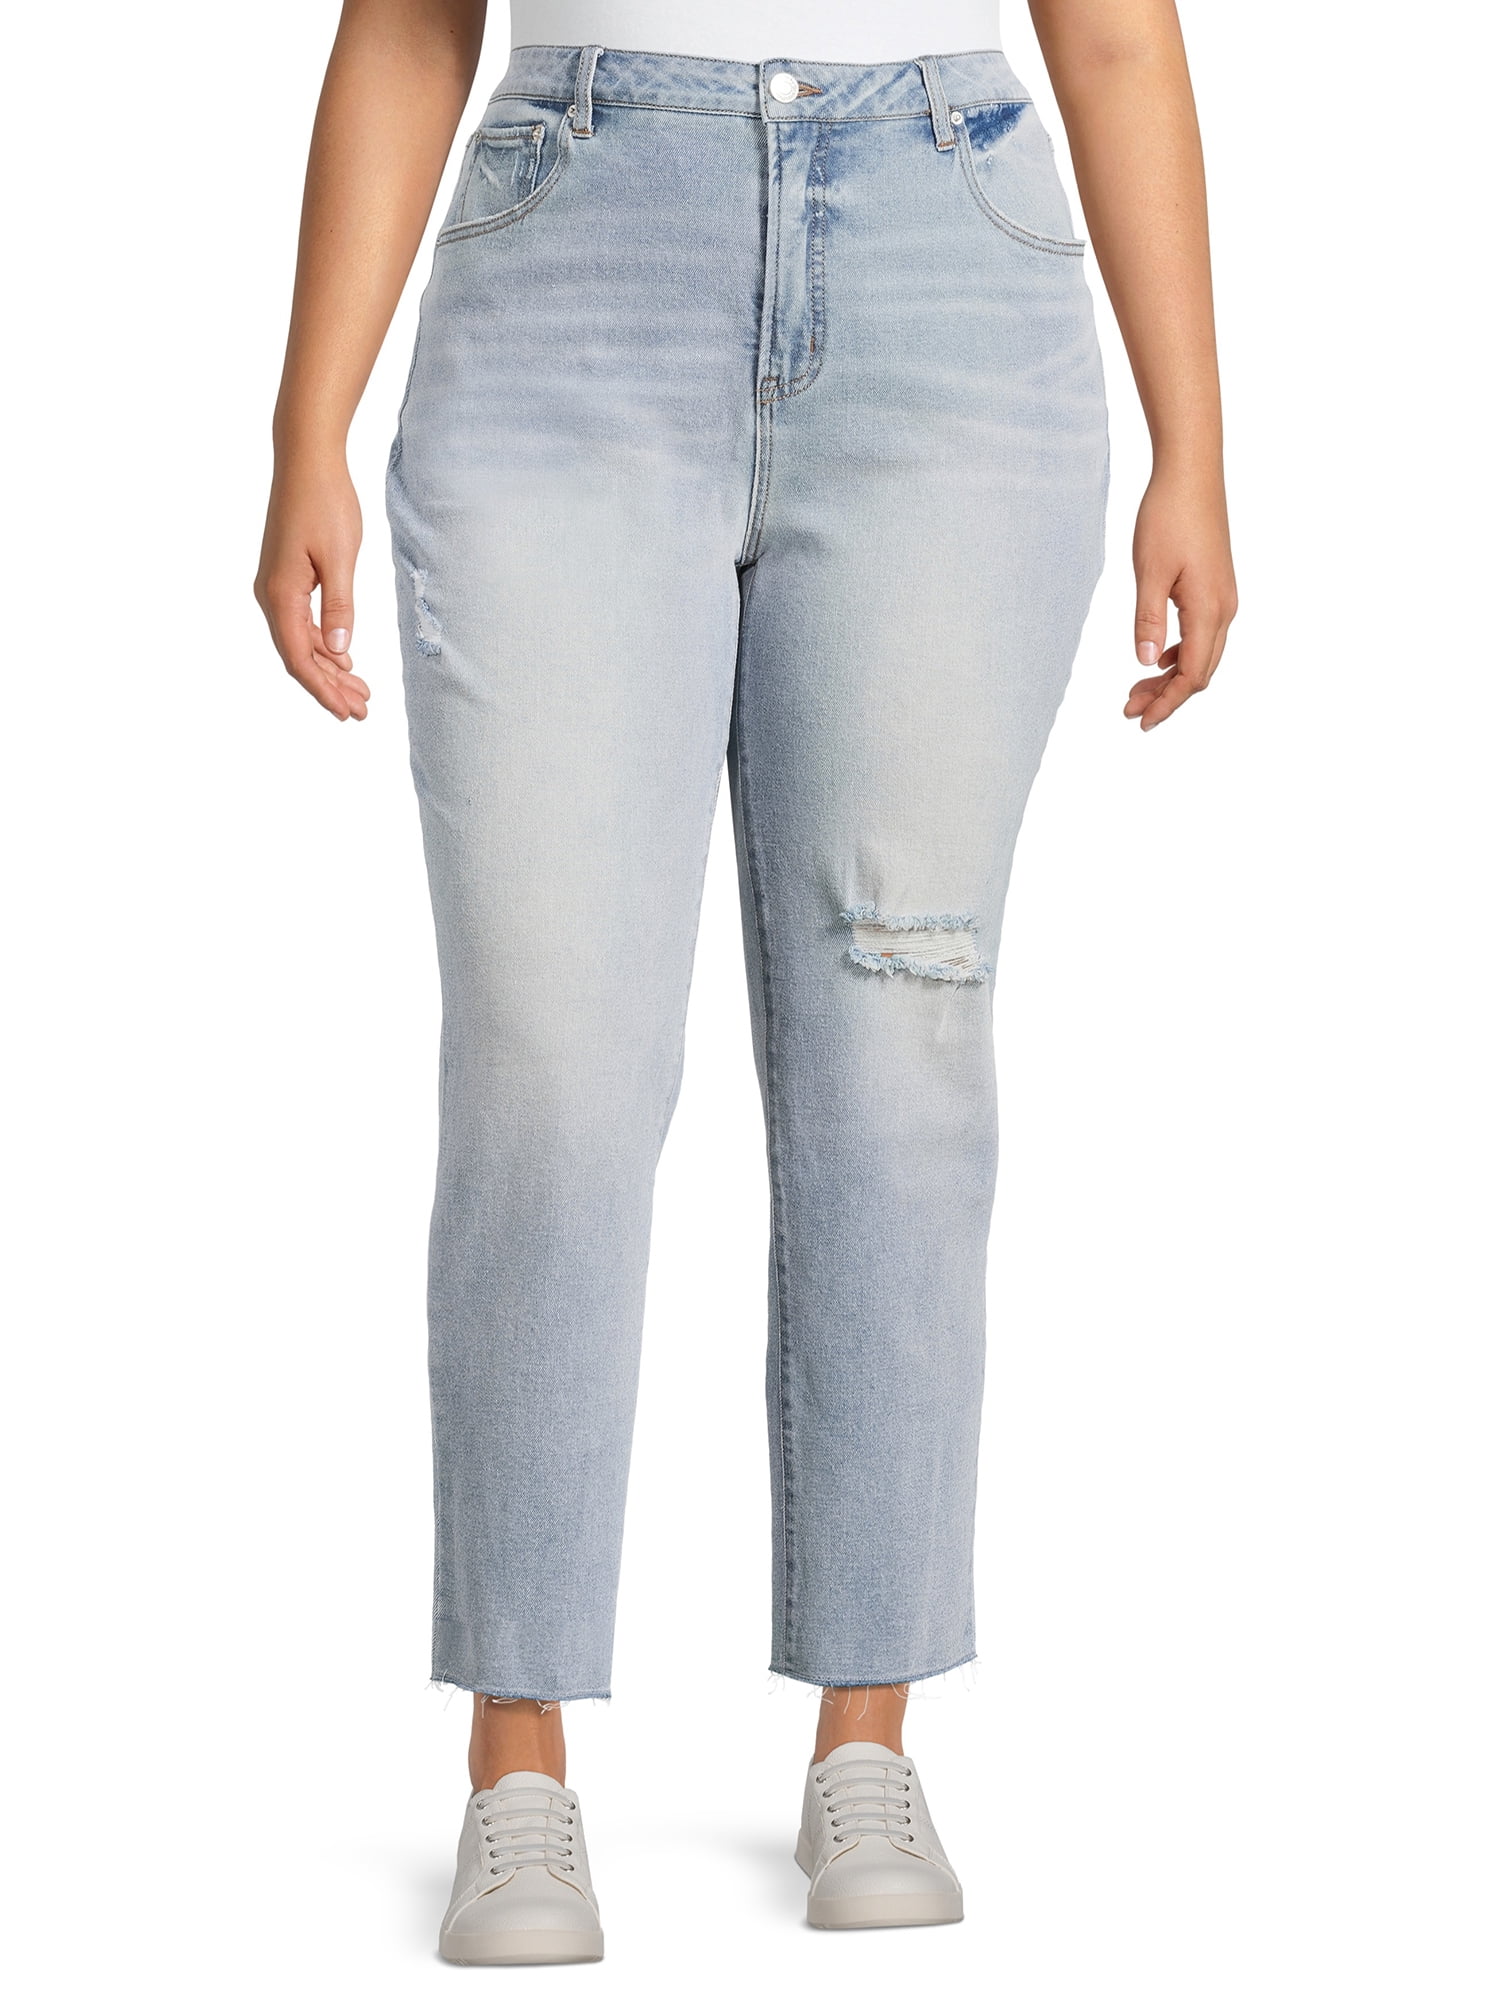 Terra & Sky Women's Plus Size Curvy Jeans - Walmart.com